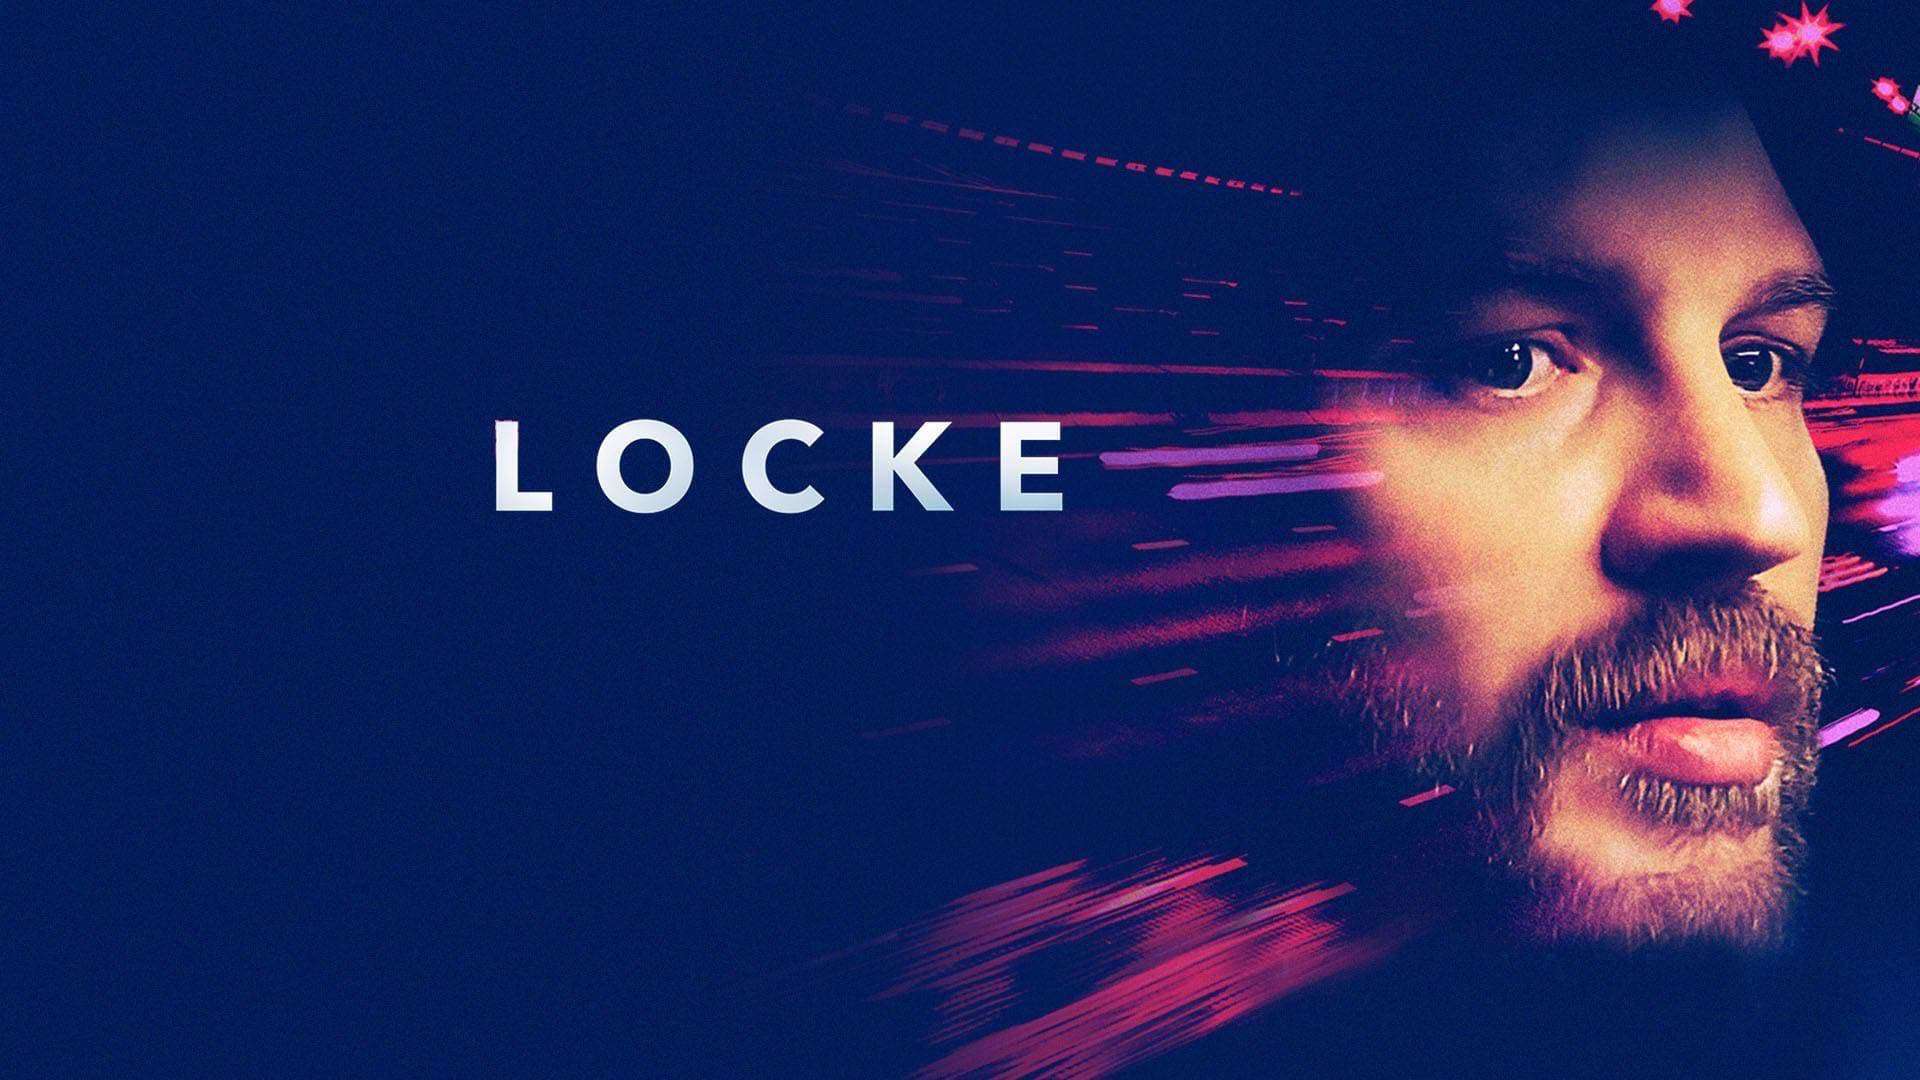  Locke Poster HD